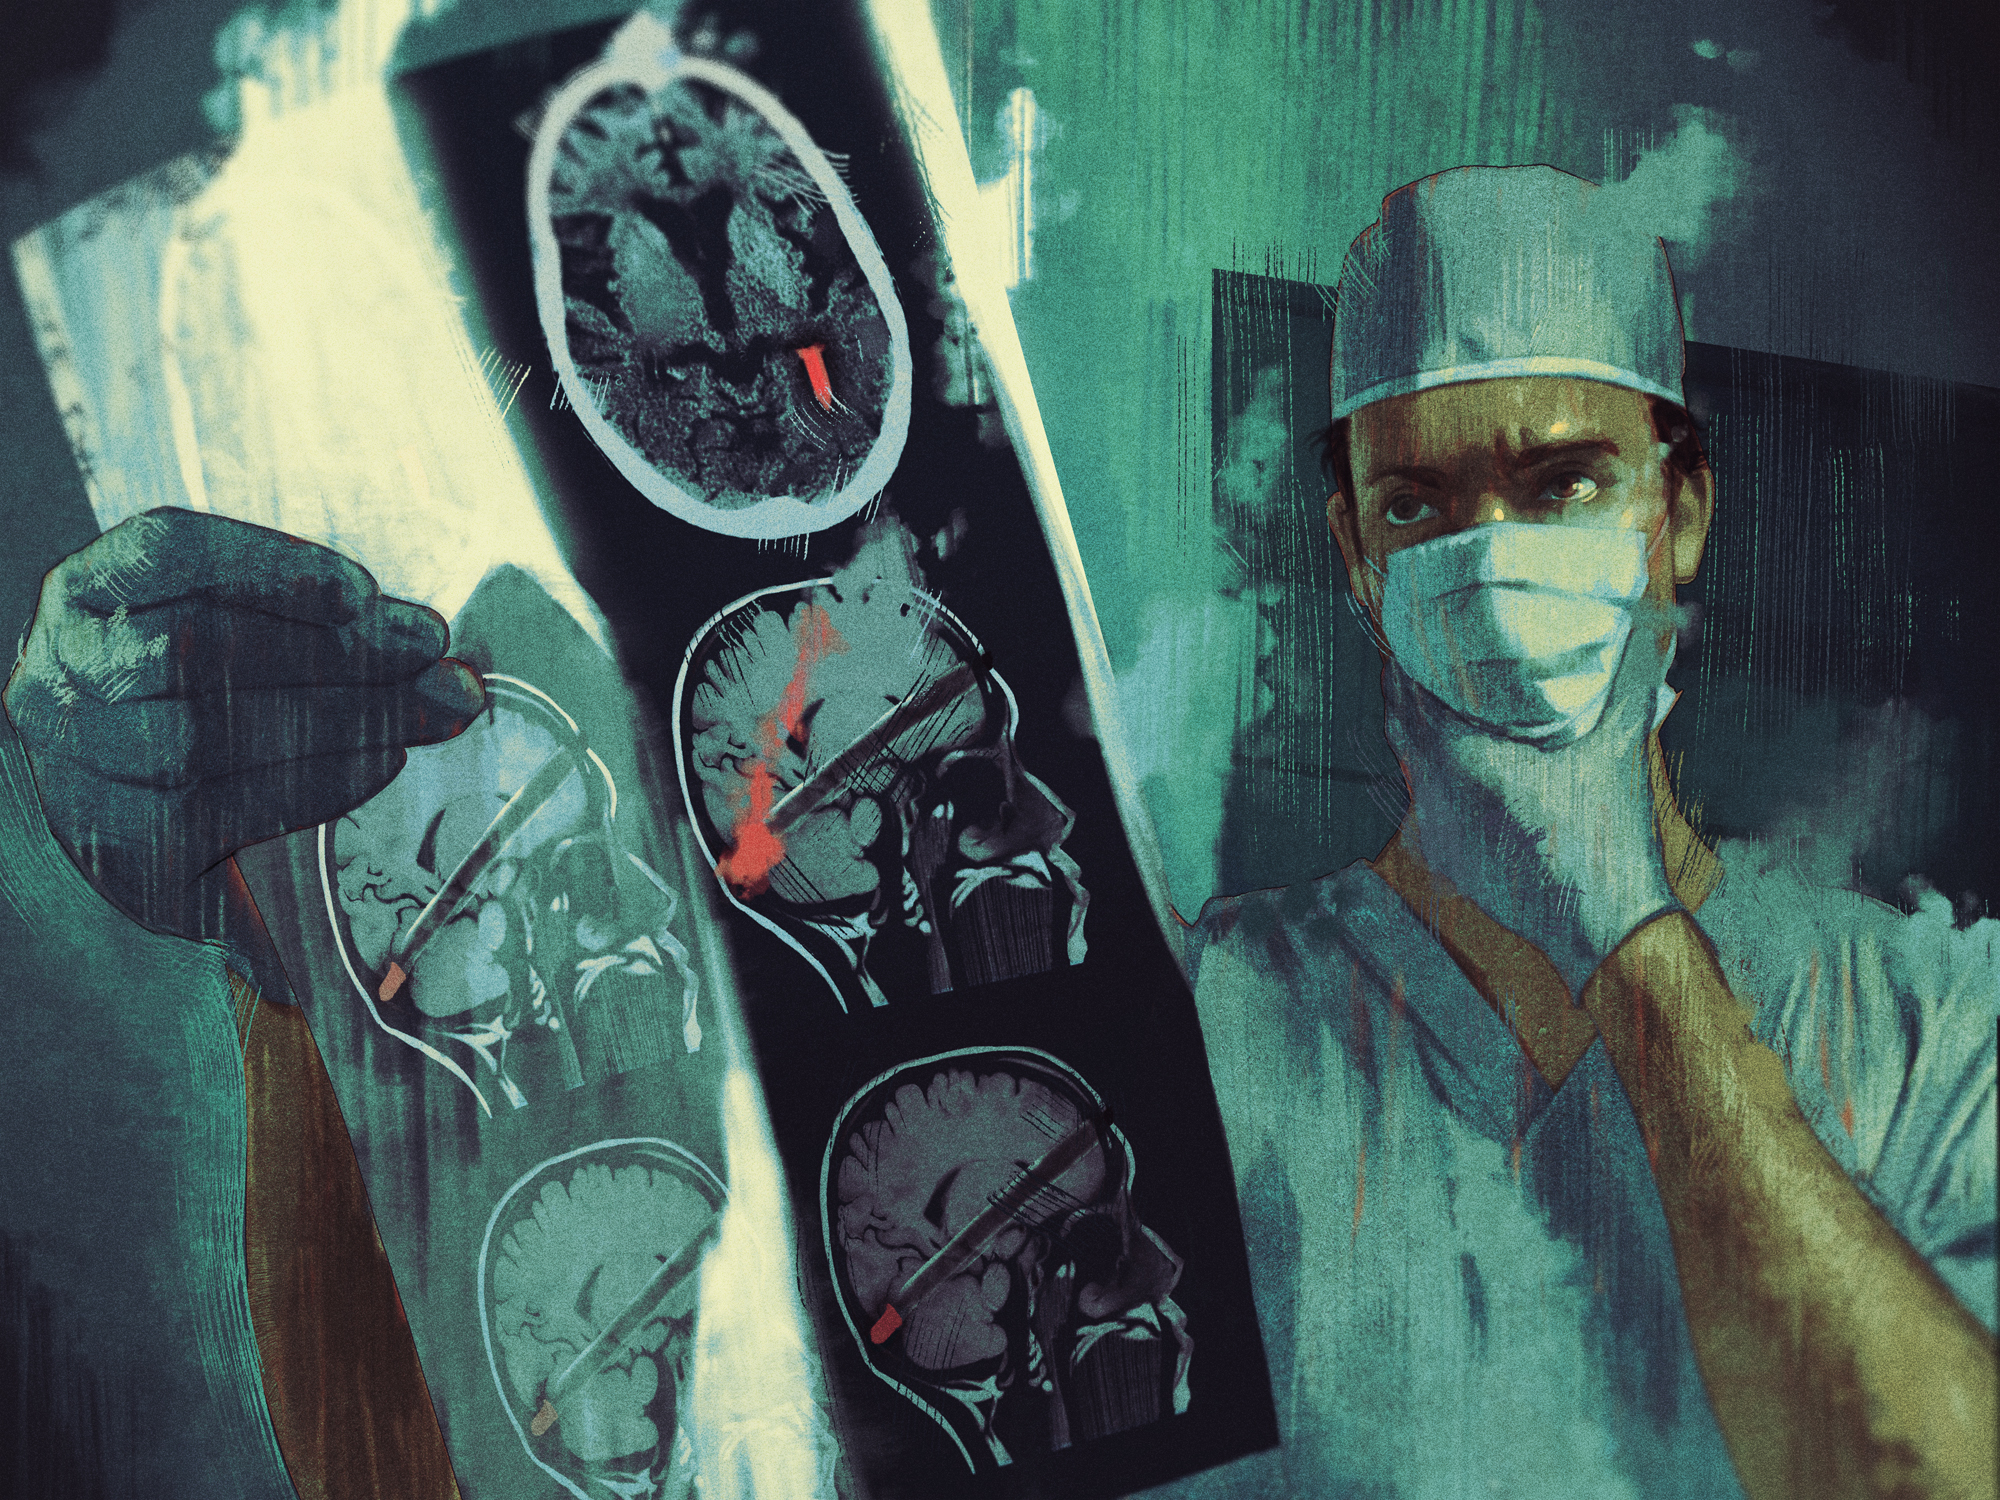 18_vice_magazine_bullet_brain_surgery.jpg